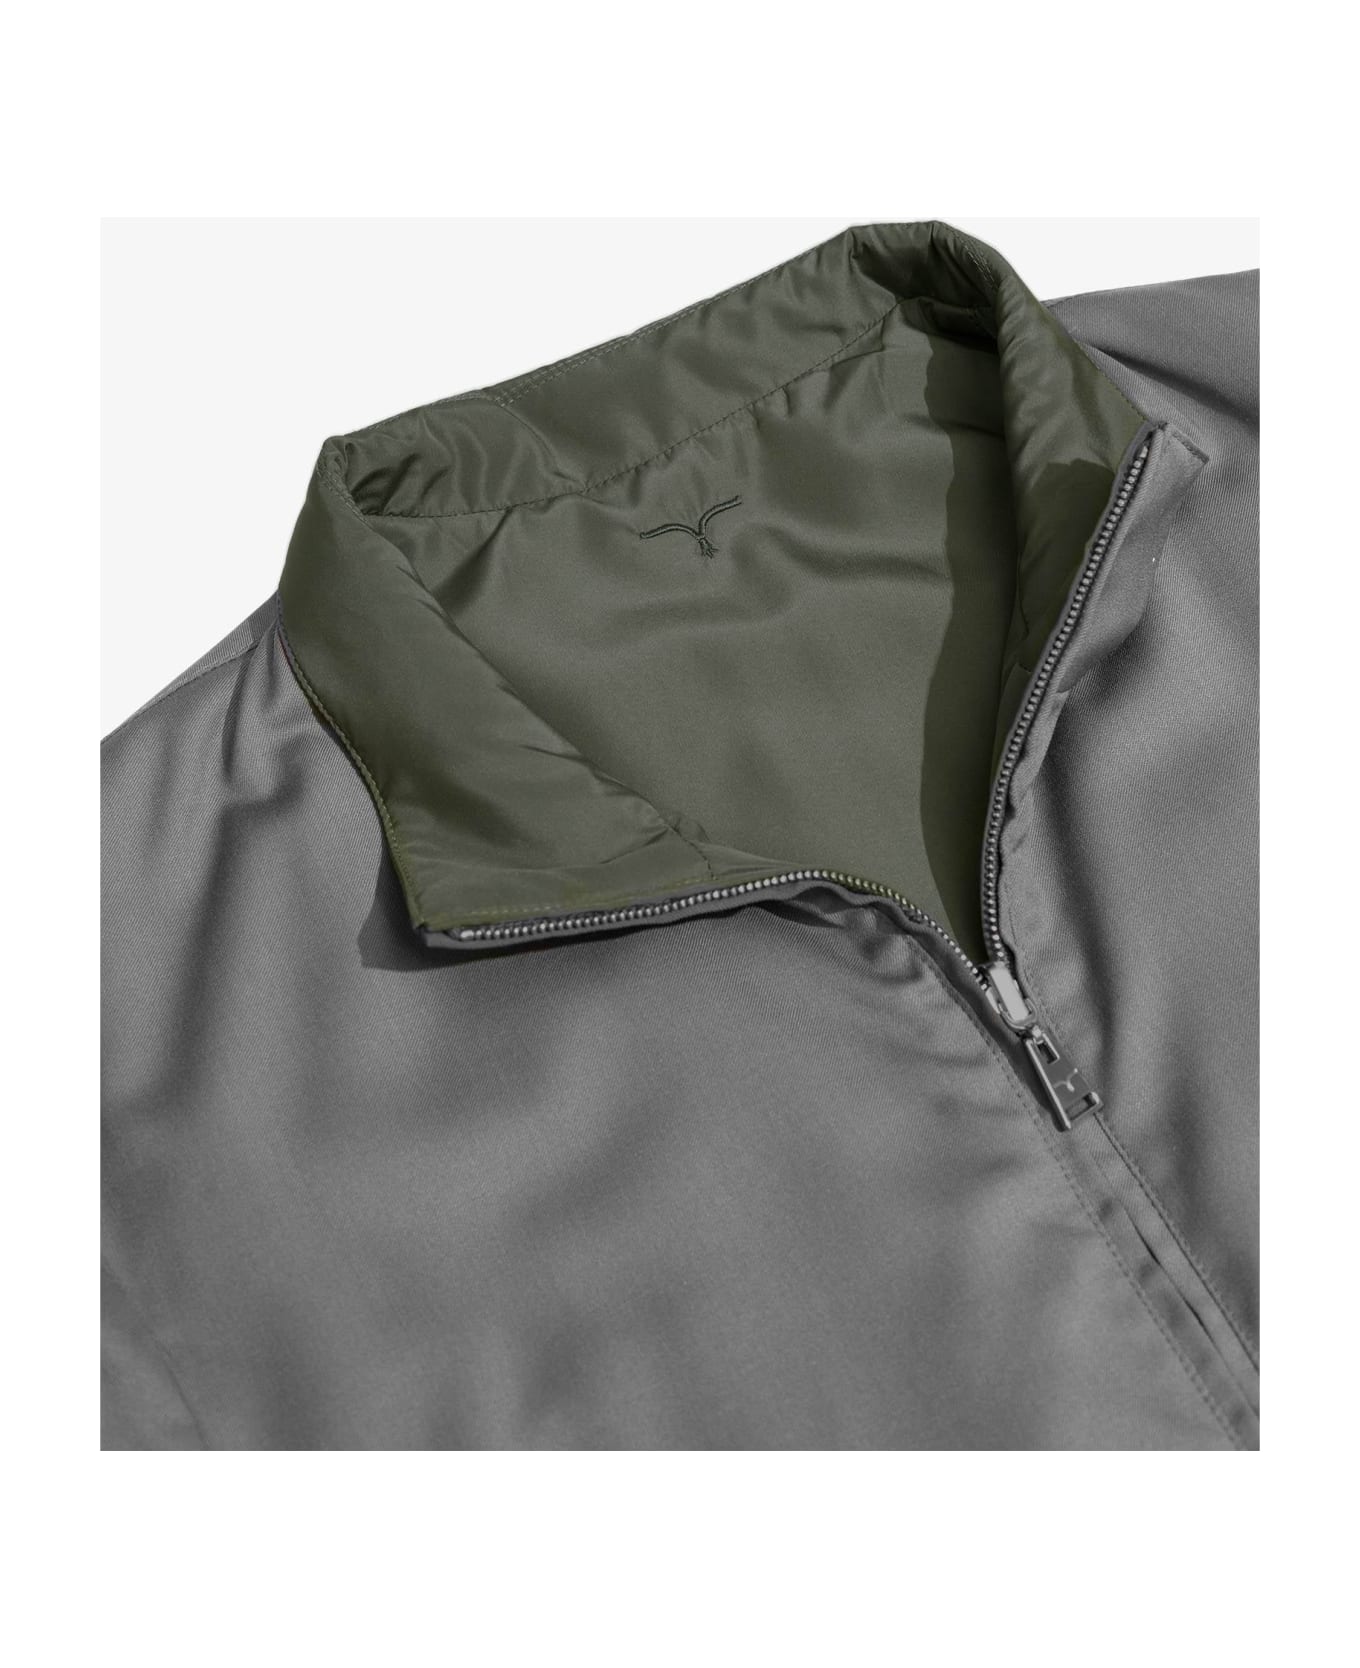 Larusmiani Reversible Wool Jacket Jacket - LightGray